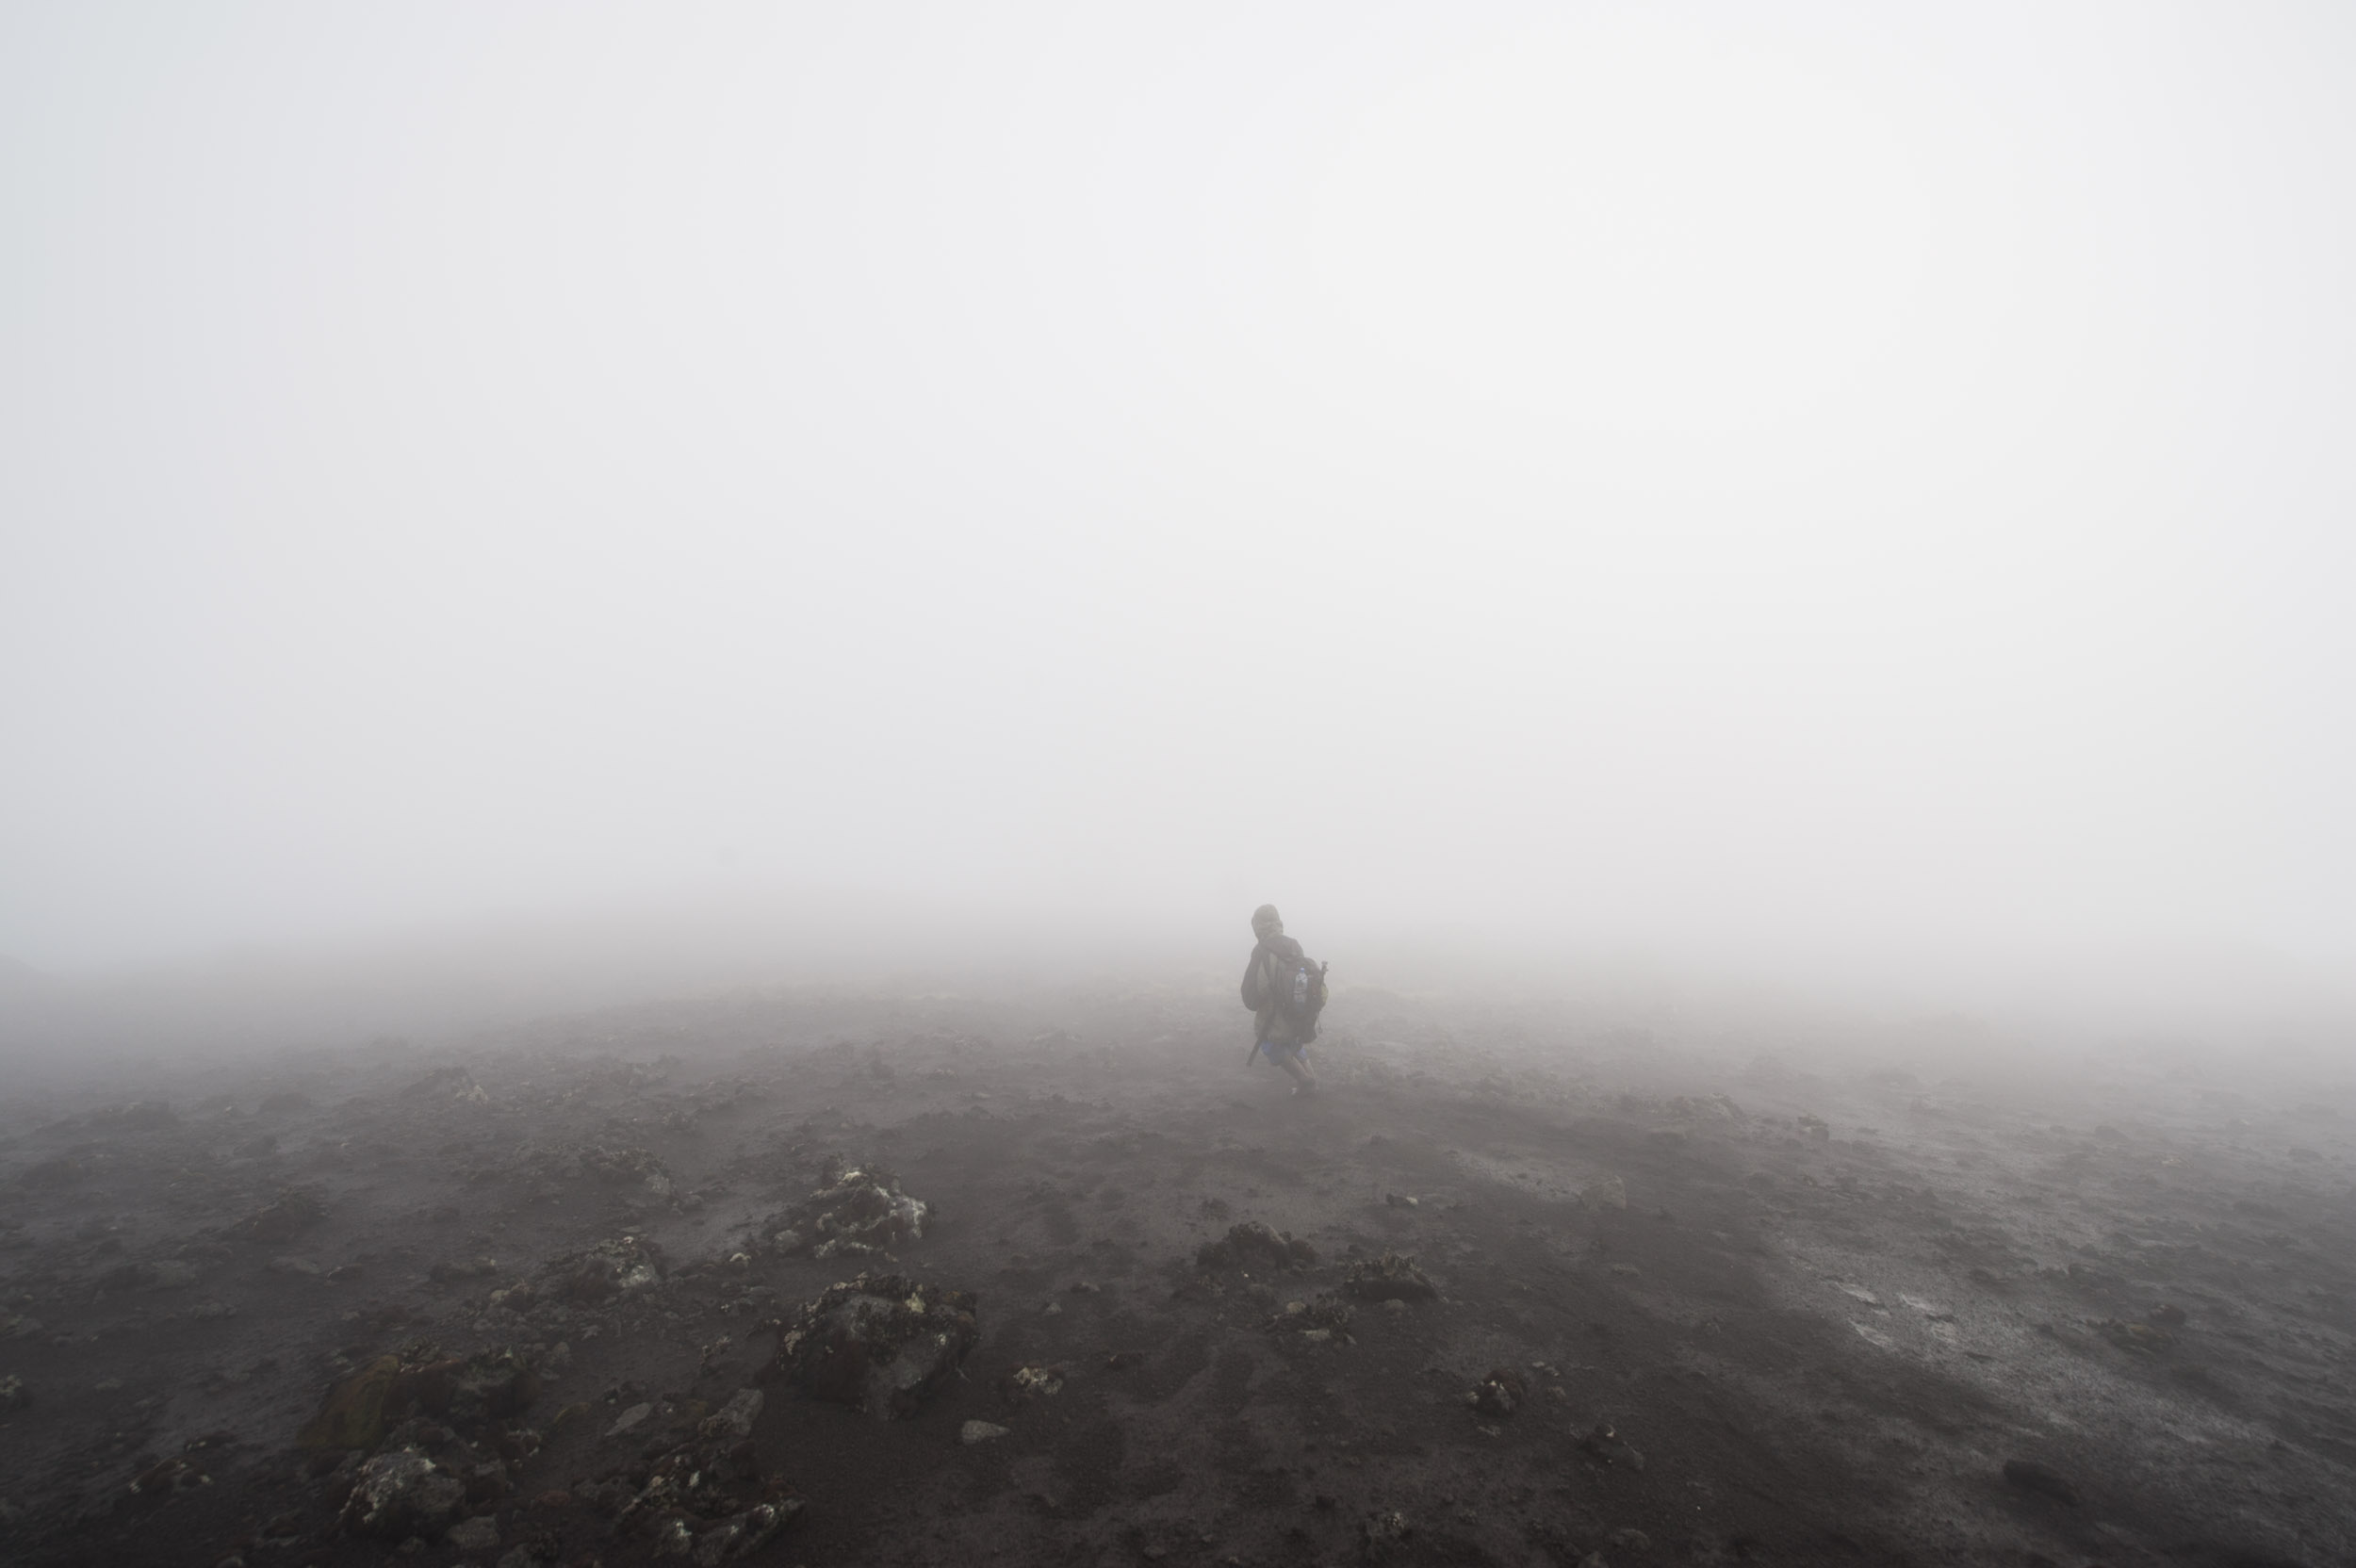  A porter walks down the summit of Mount Karisimbi, one of the Virunga volcanoes that rises over 14,400 feet tall.&nbsp; 